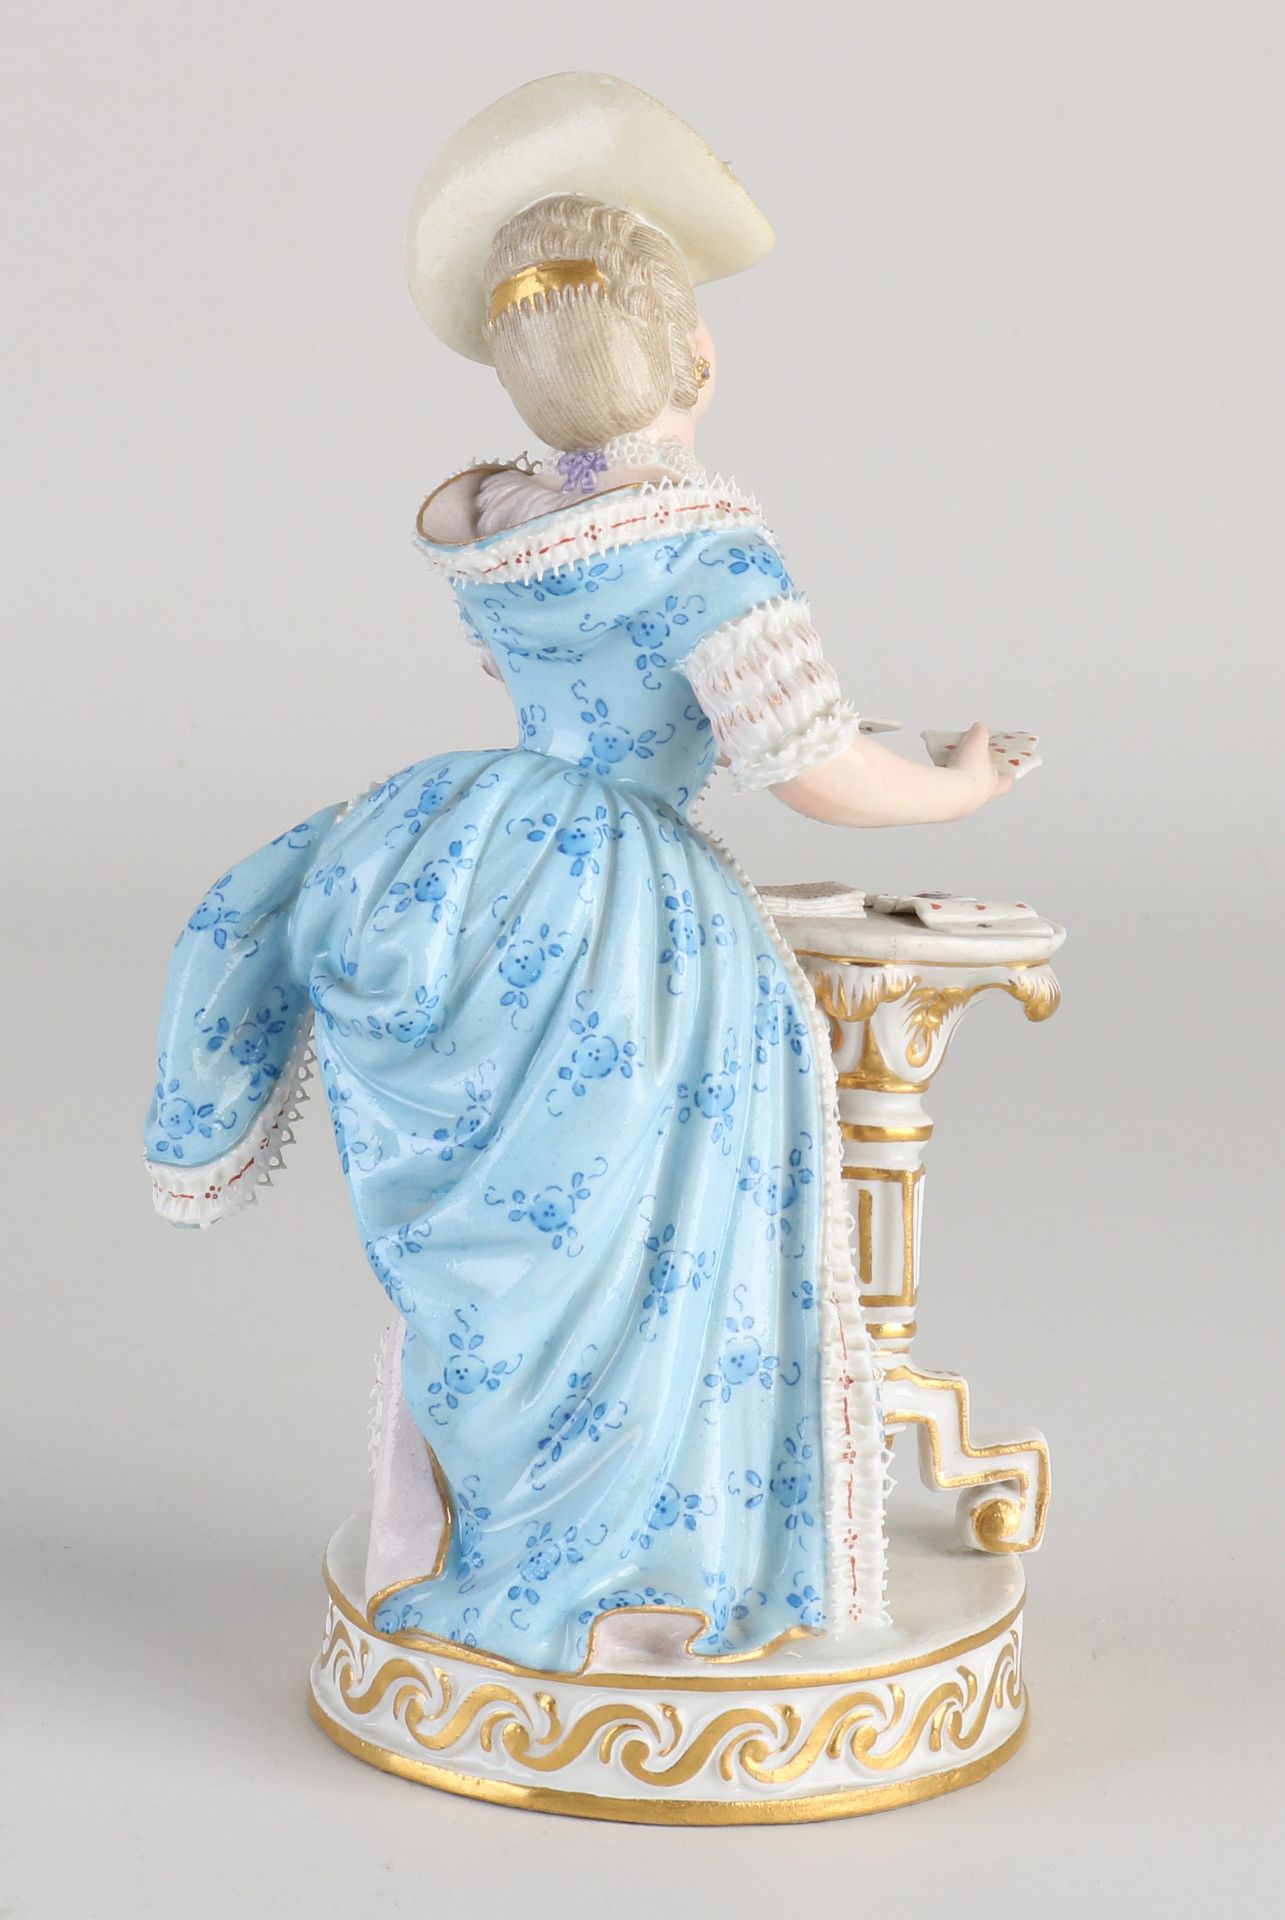 Antique Meissen figure, H 16 cm. - Image 2 of 3